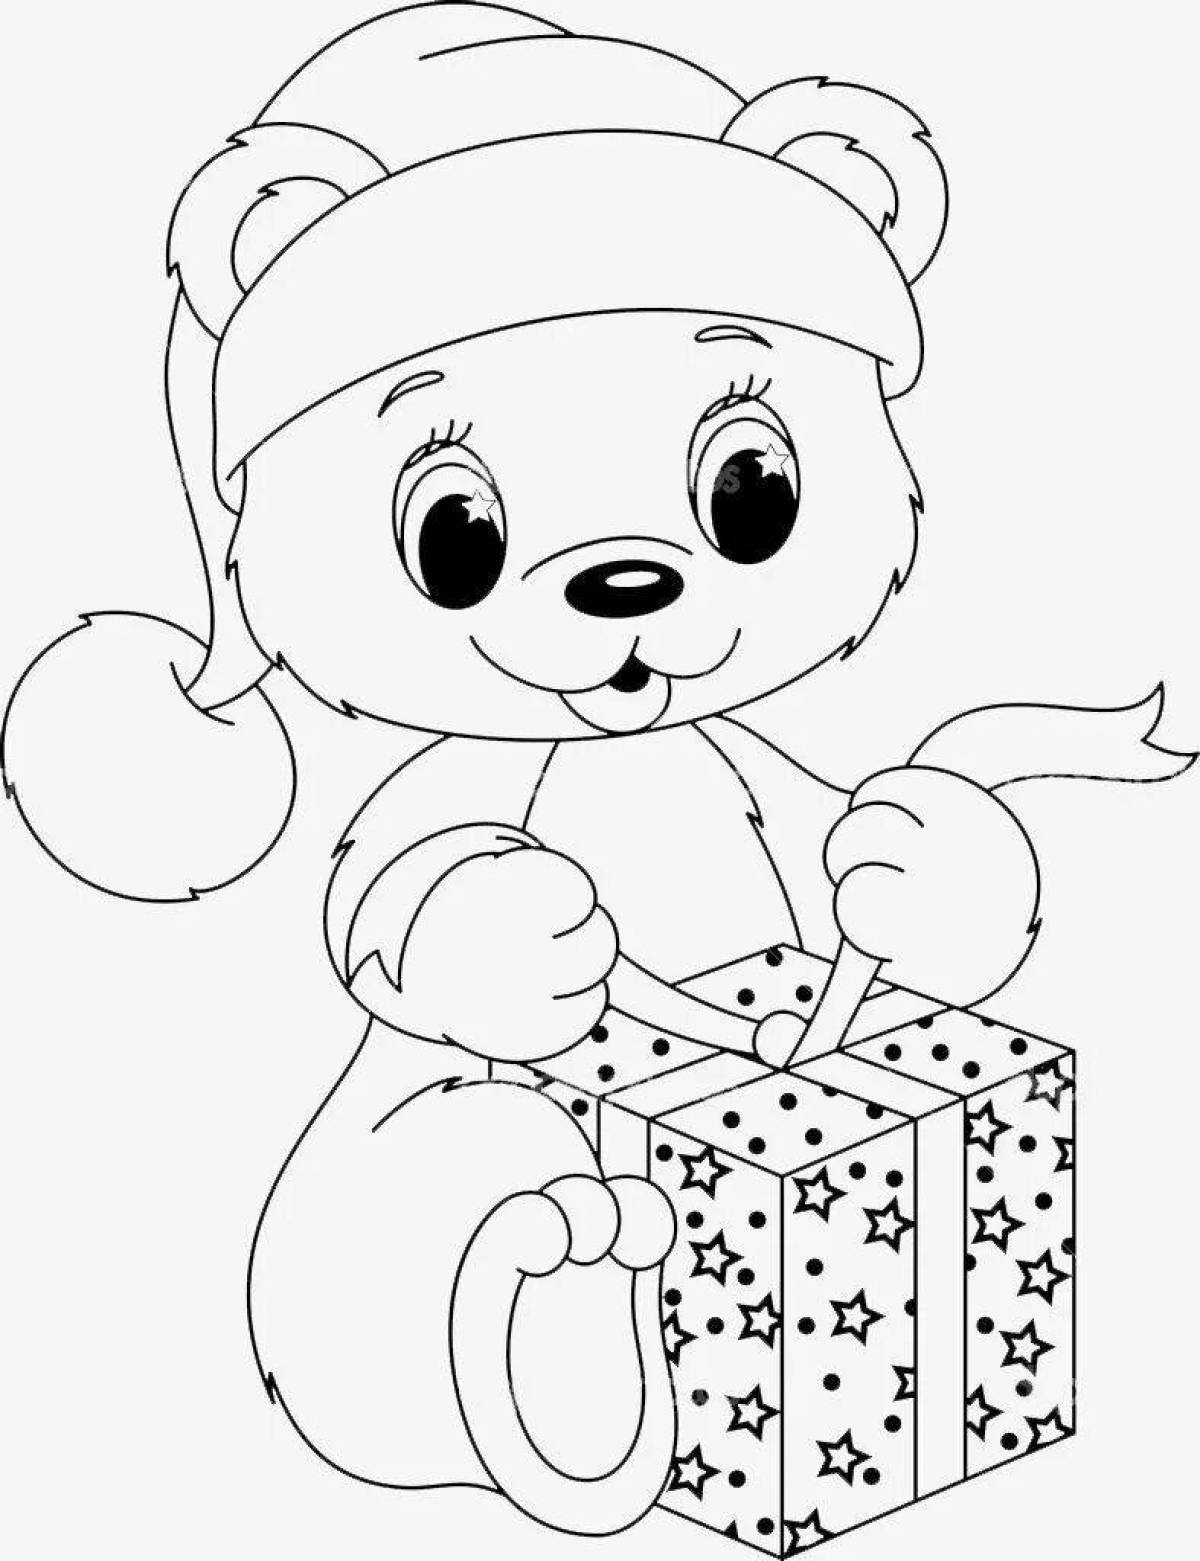 Coloring page magical christmas bear